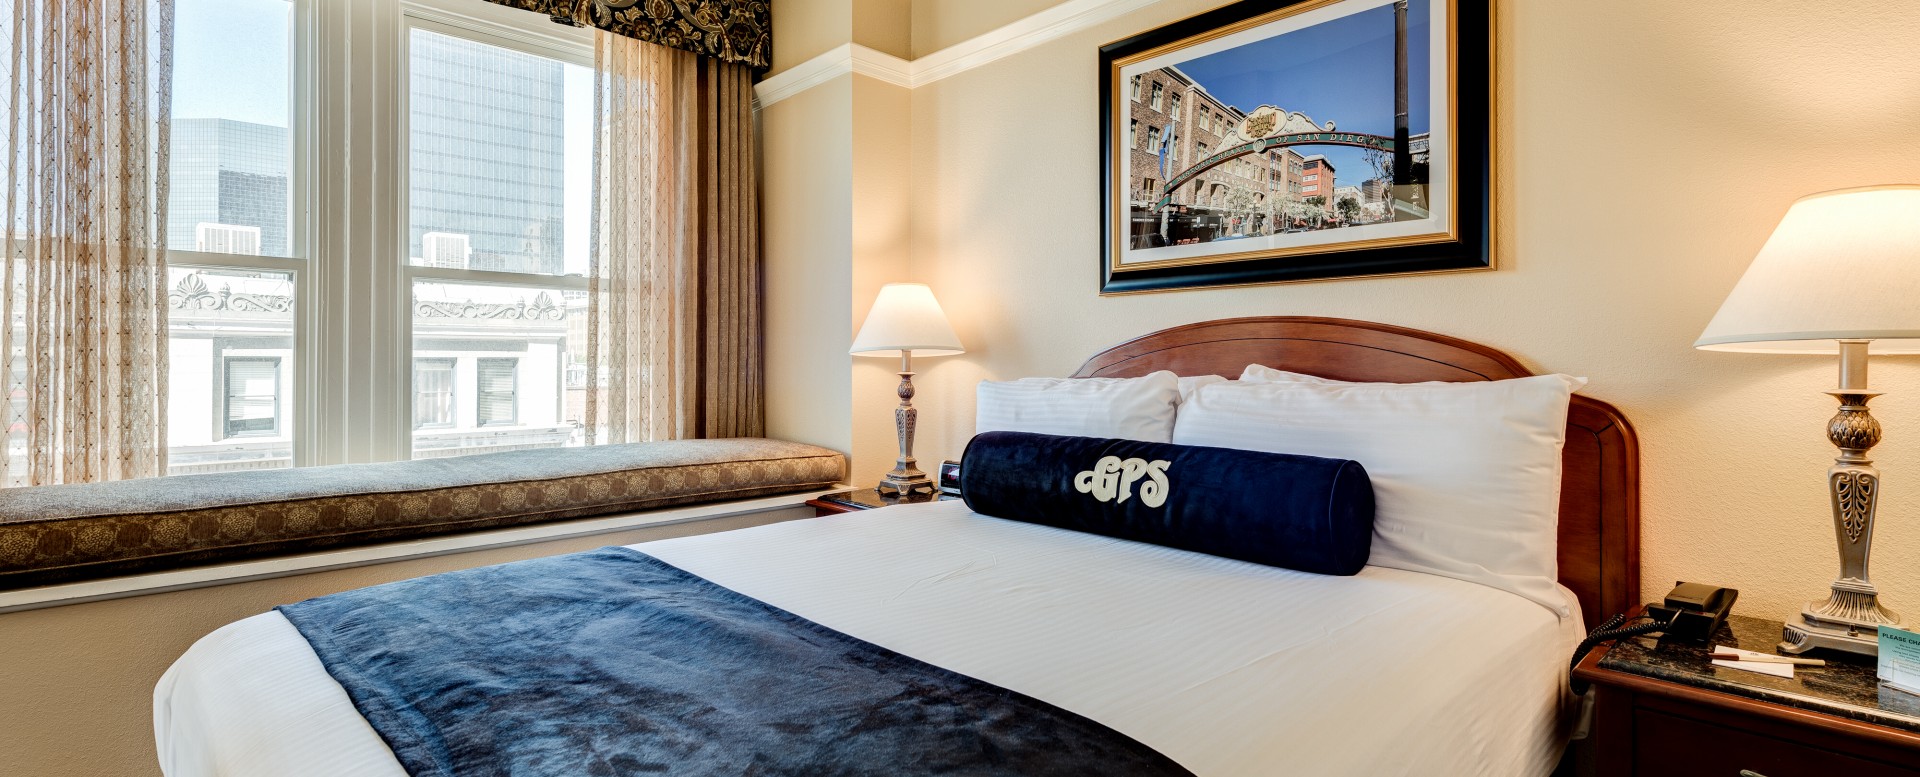 Gaslamp Plaza Suites San Diego - one bed guestroom